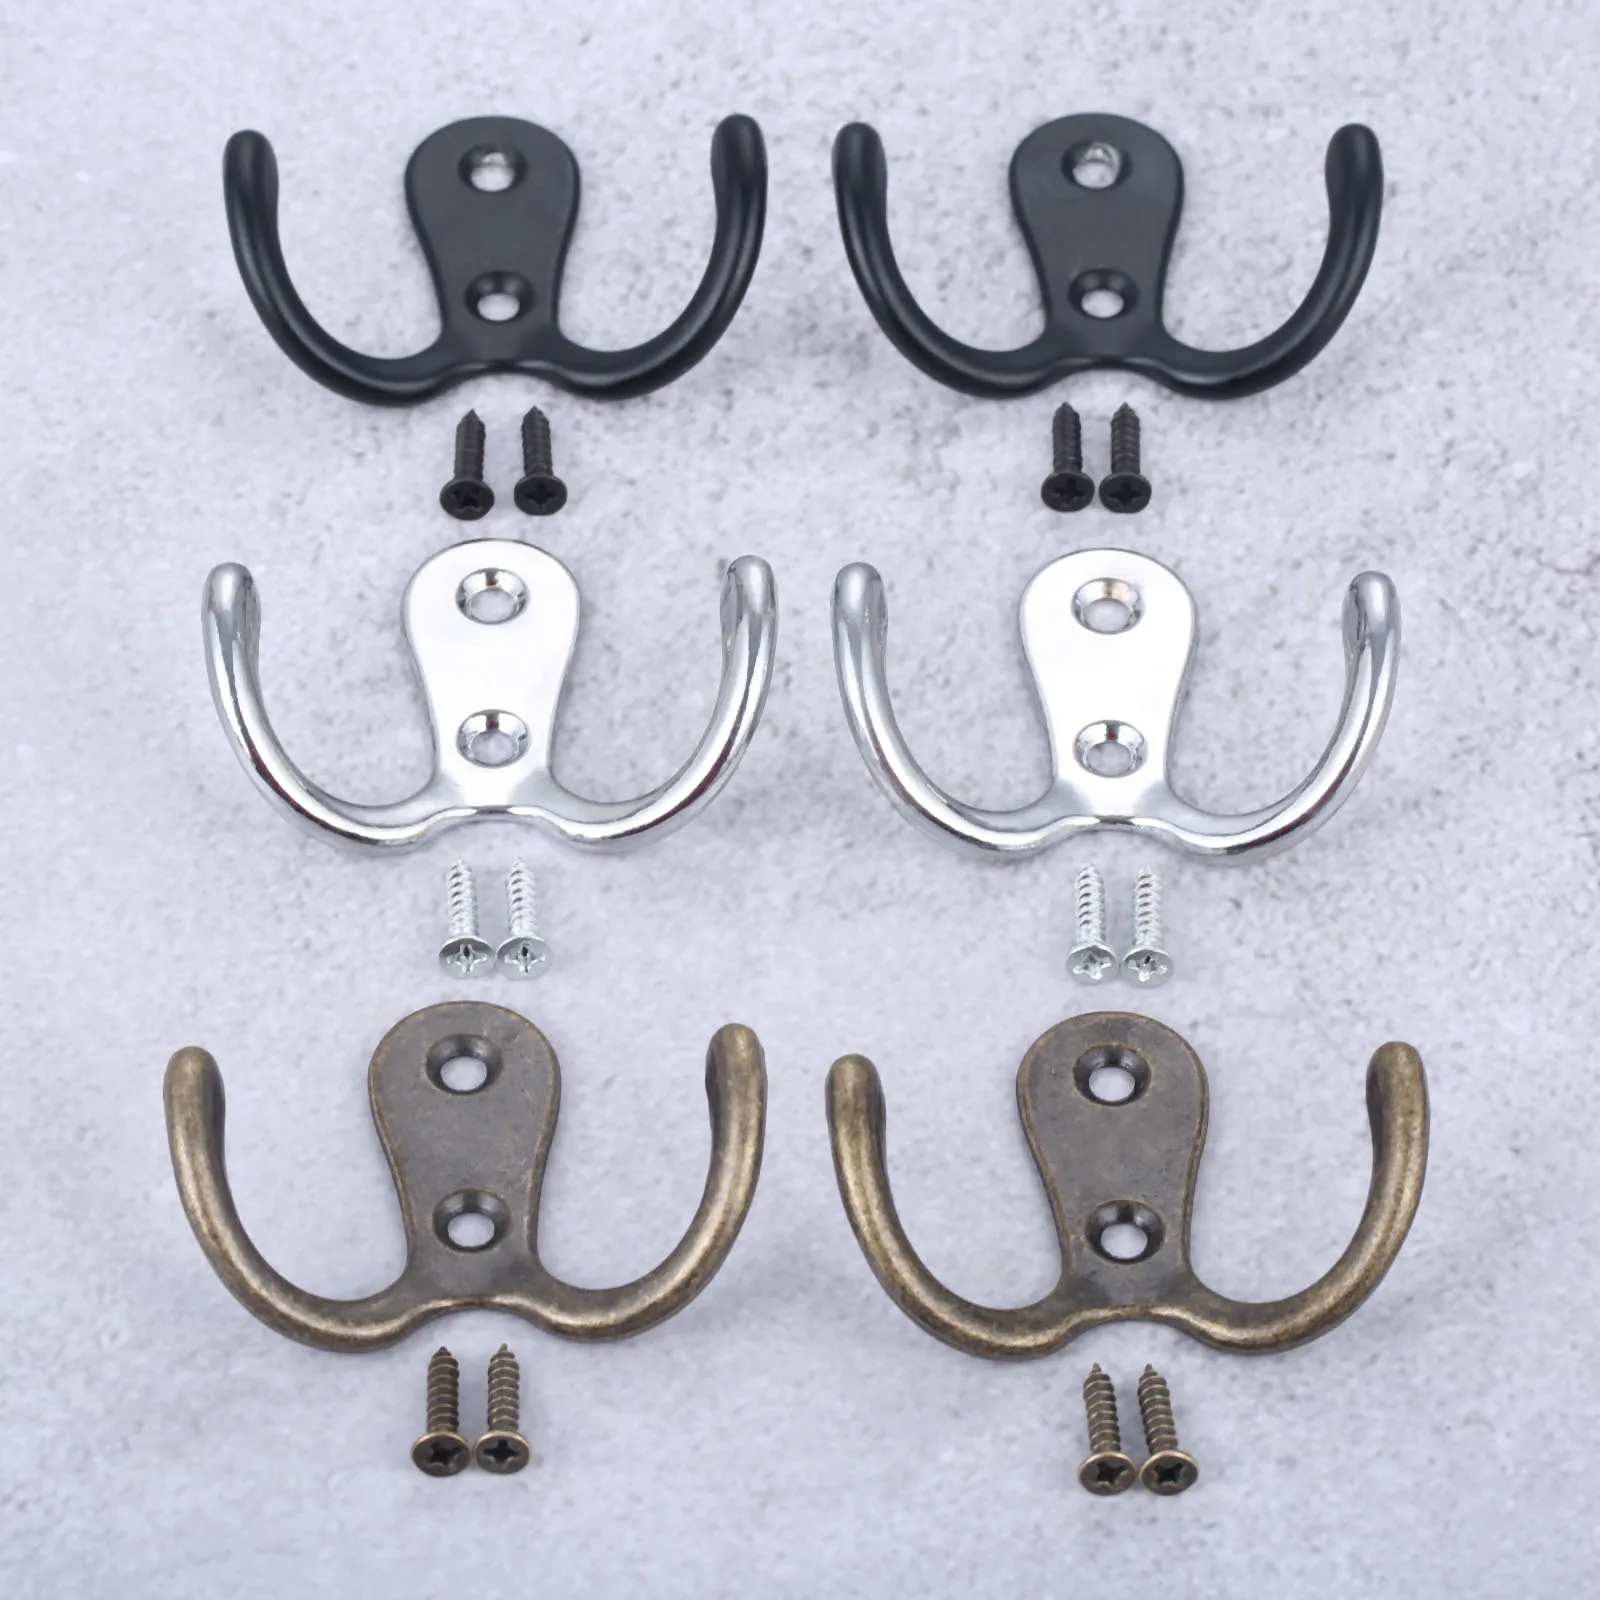 2pcs Hook Wall/Door Mounted Double Heads Hanger w/screw Black/Silver/Antique Bronze Coat/Key/Bag/Towel/Hat Holder 55mm Bathroom images - 6